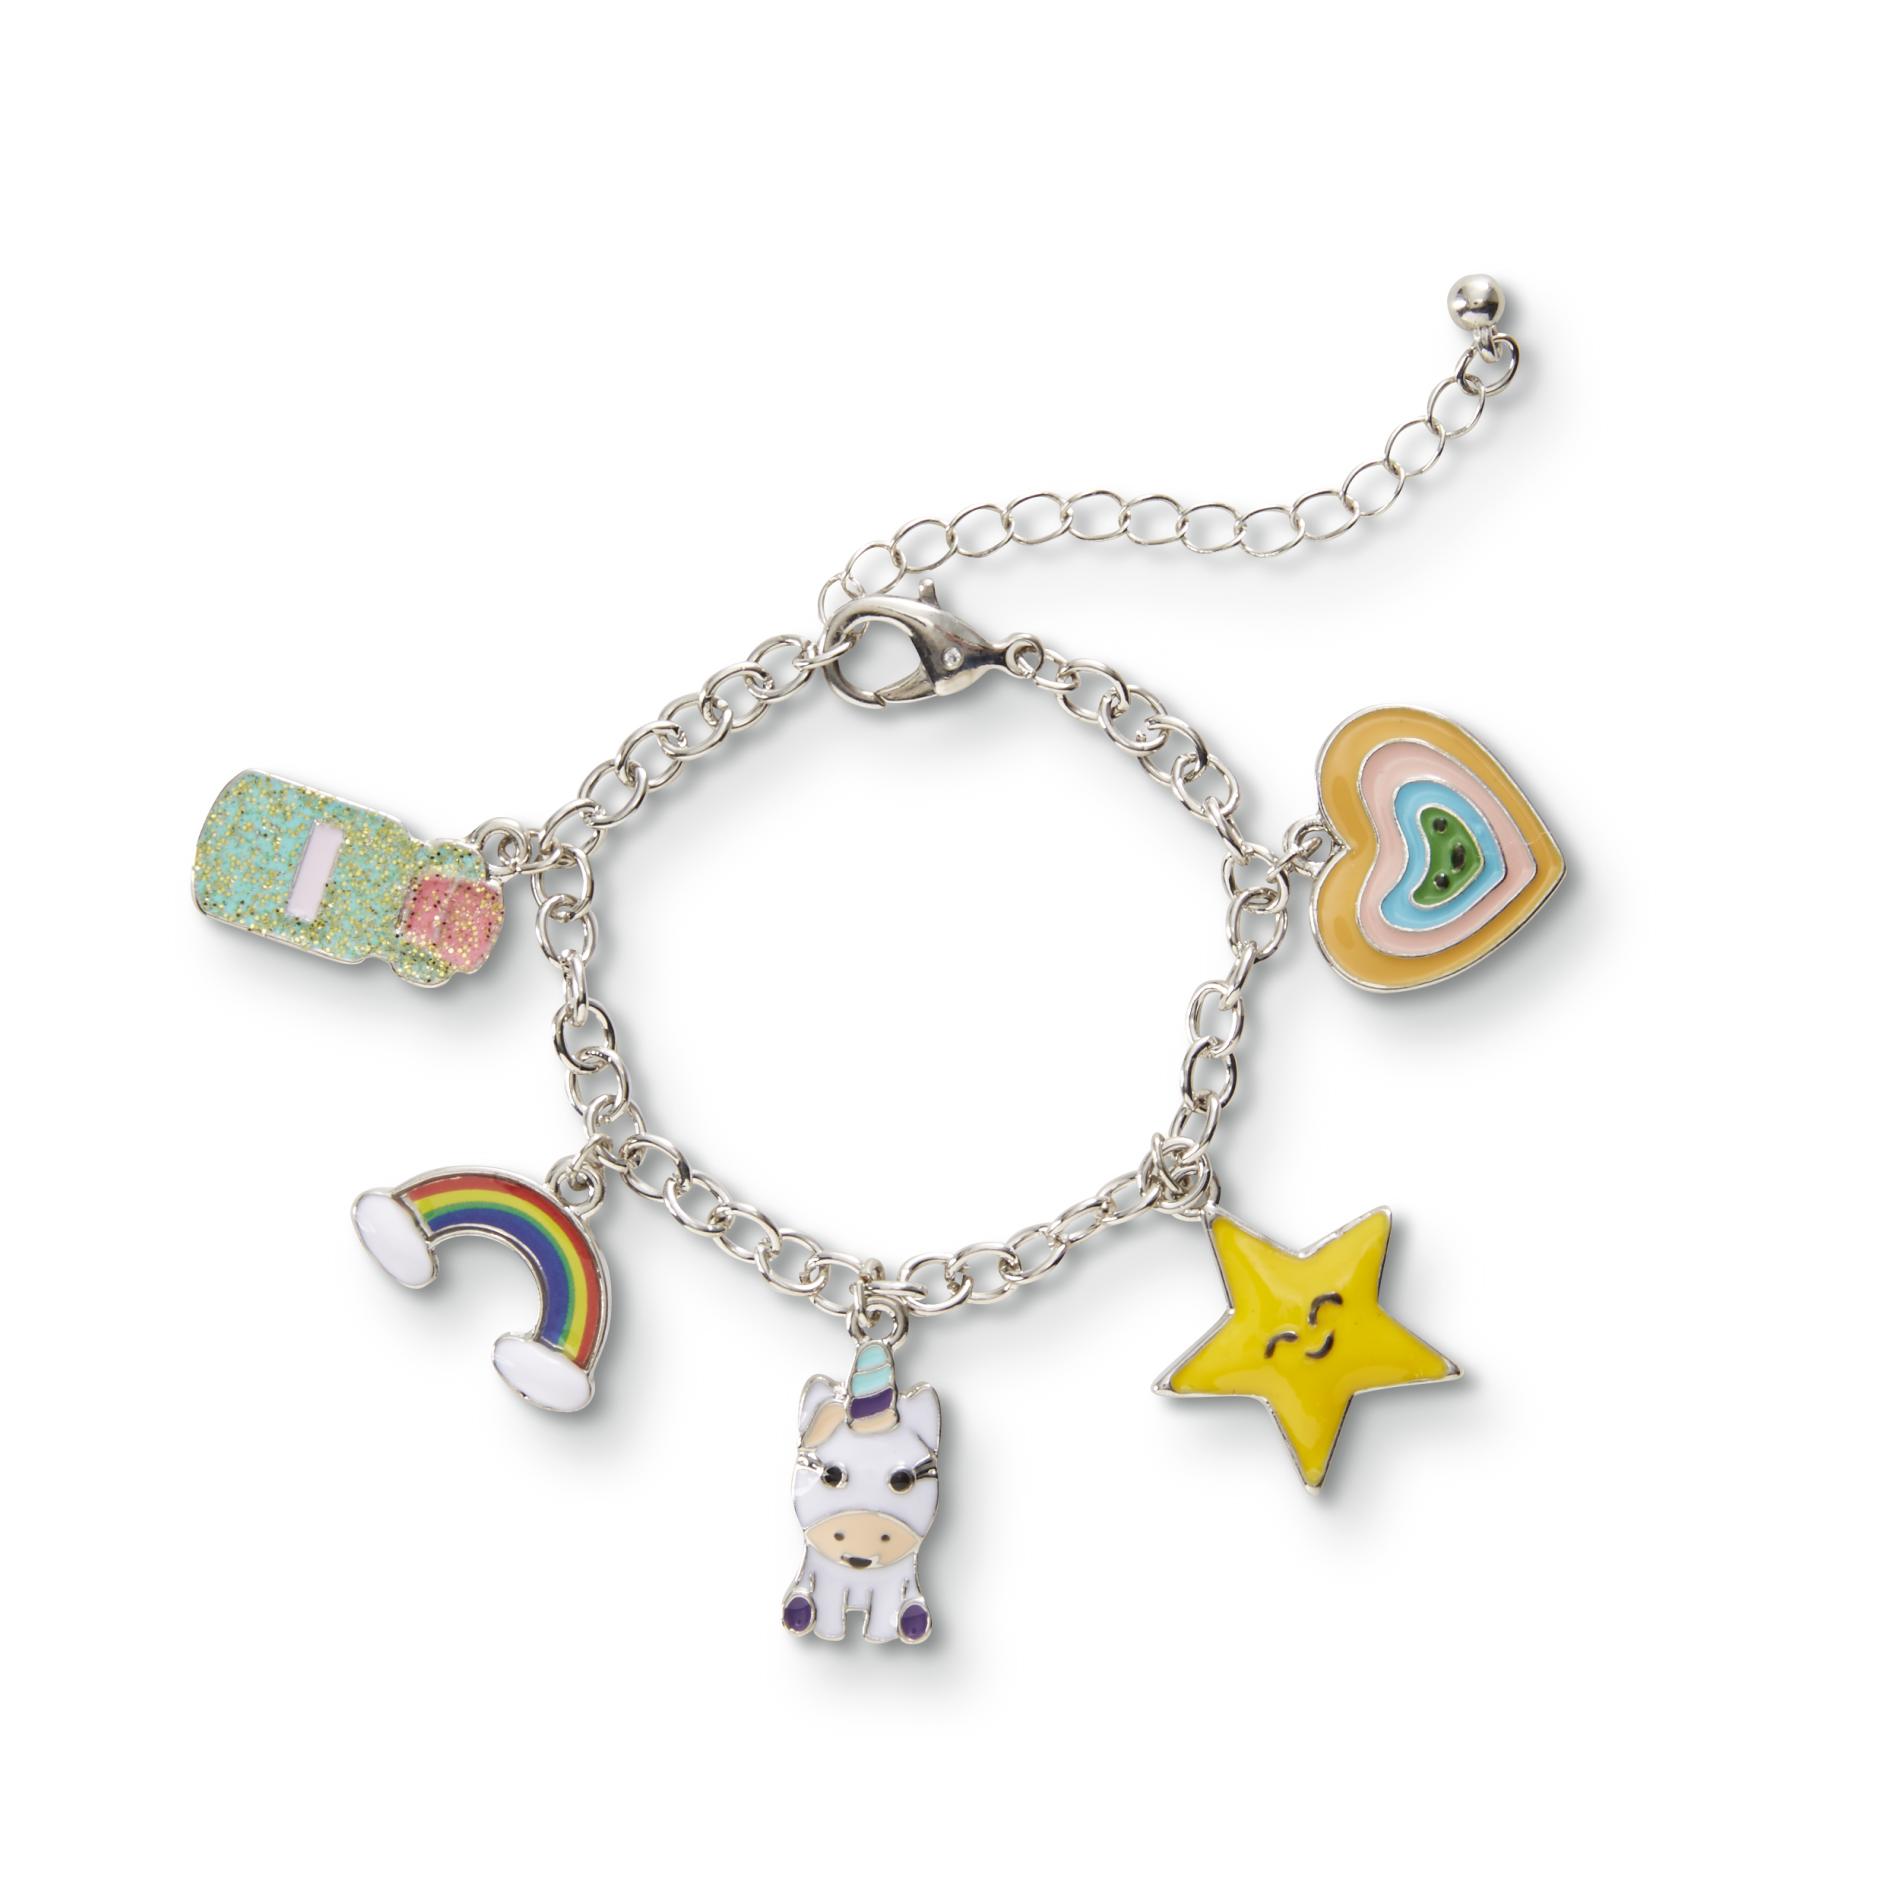 Attention Girls' Silvertone Charm Bracelet - Unicorn/Star